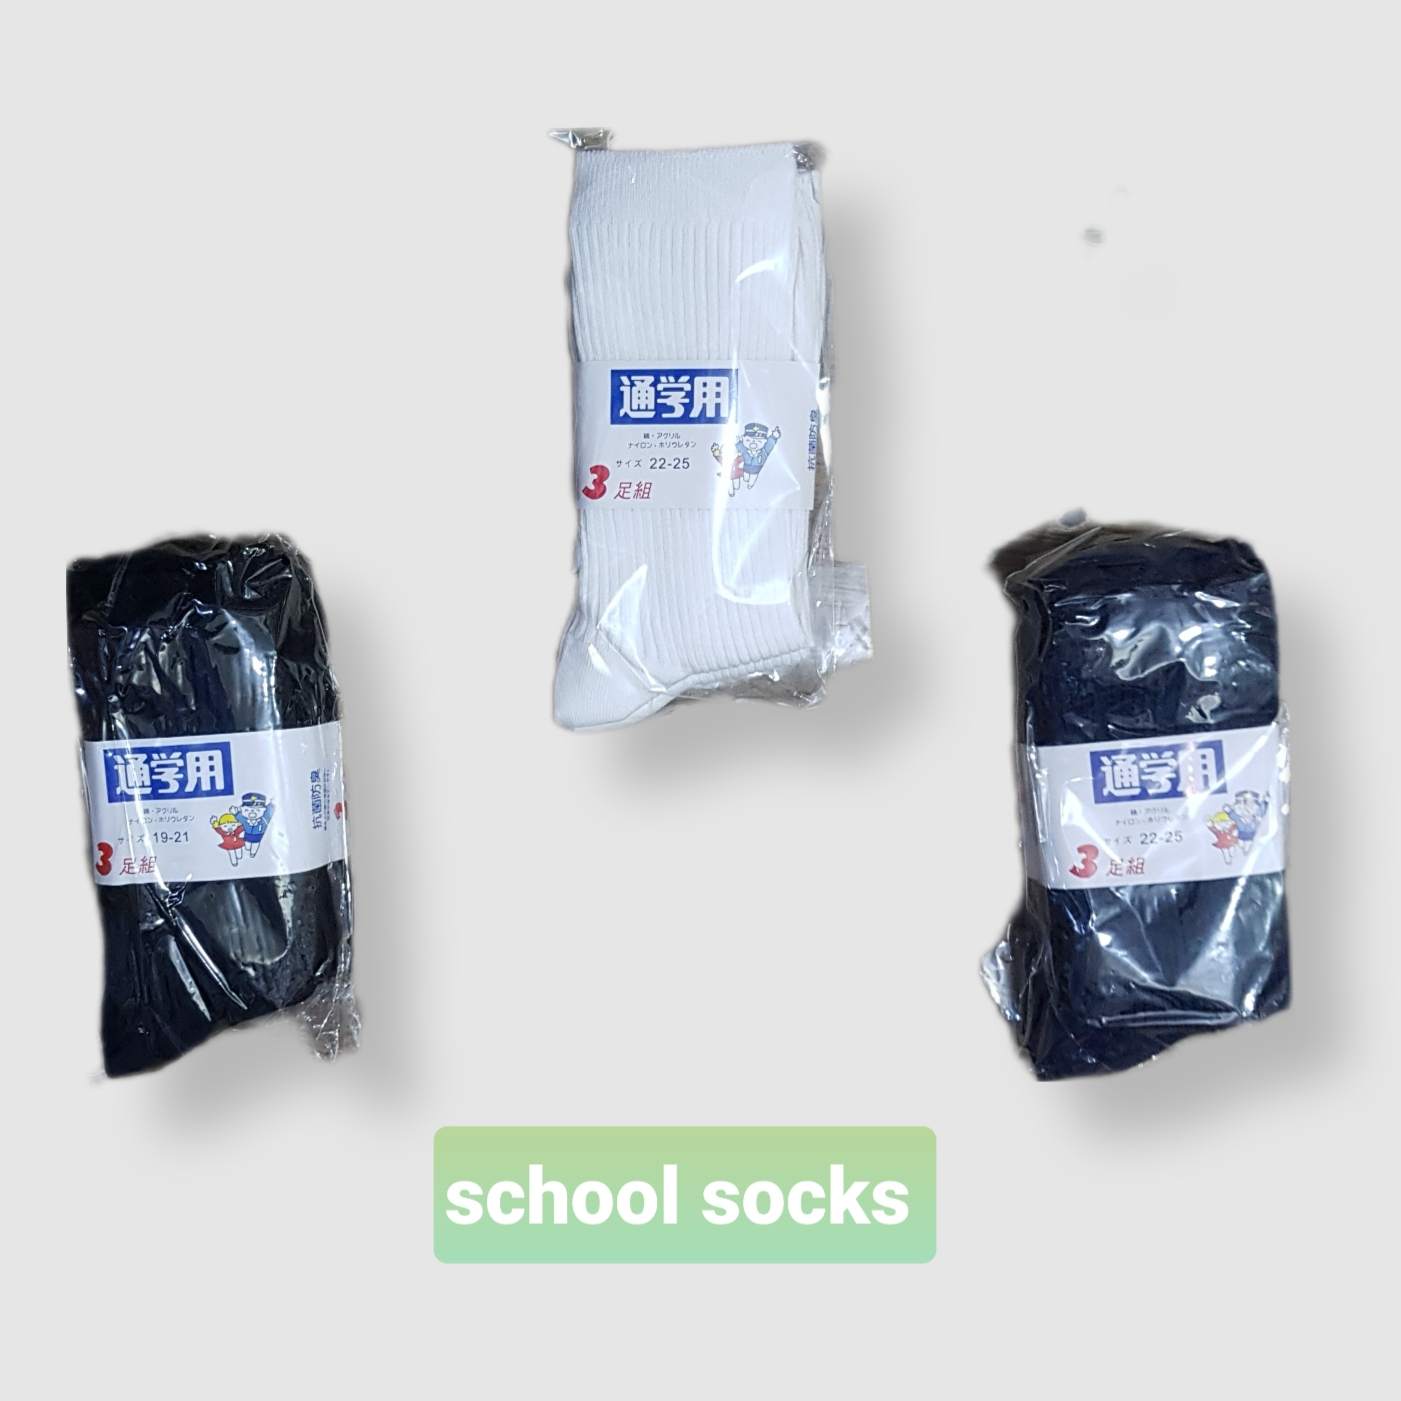 Baby school socks